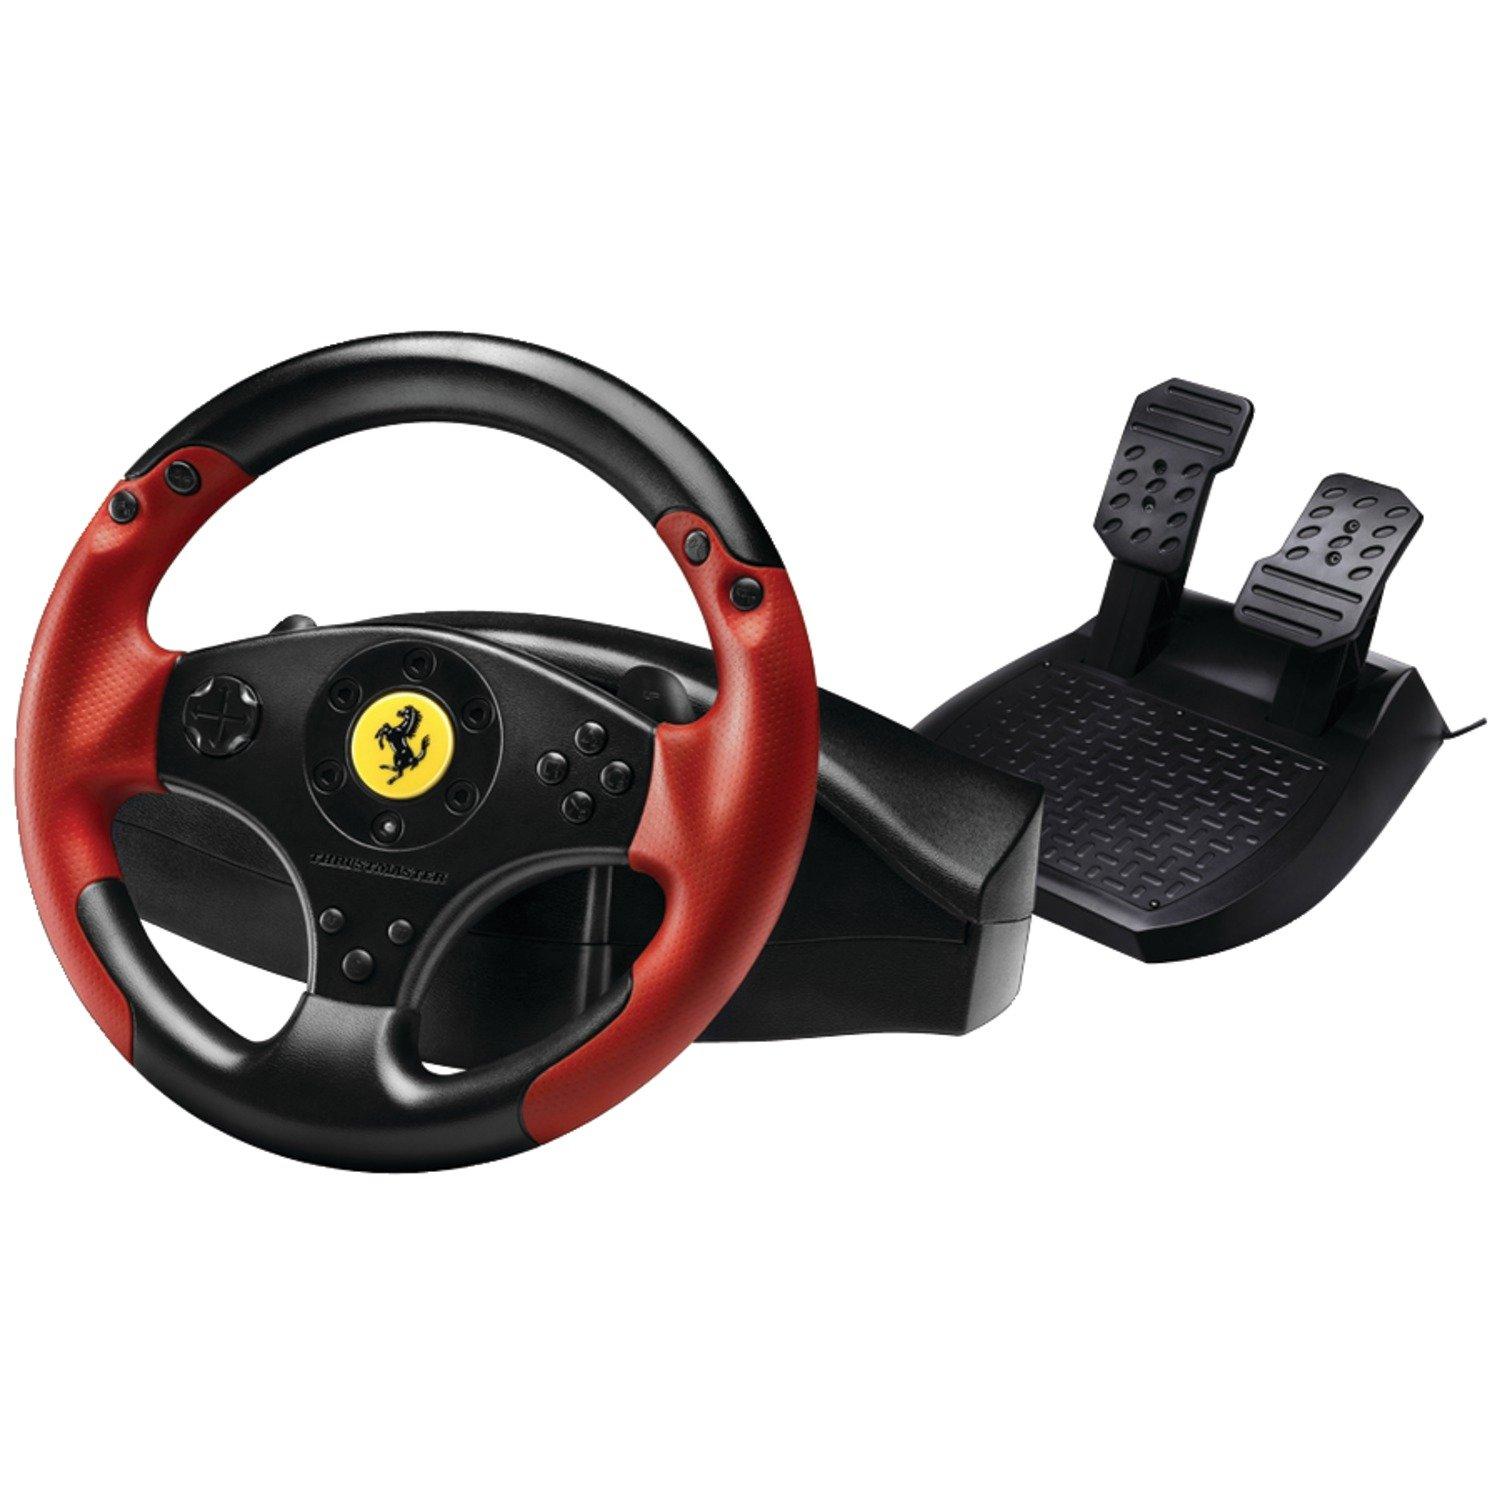 Playstation 3 Red Legend Edition Ferrari Racing Wheel Playstation 3 Gamestop